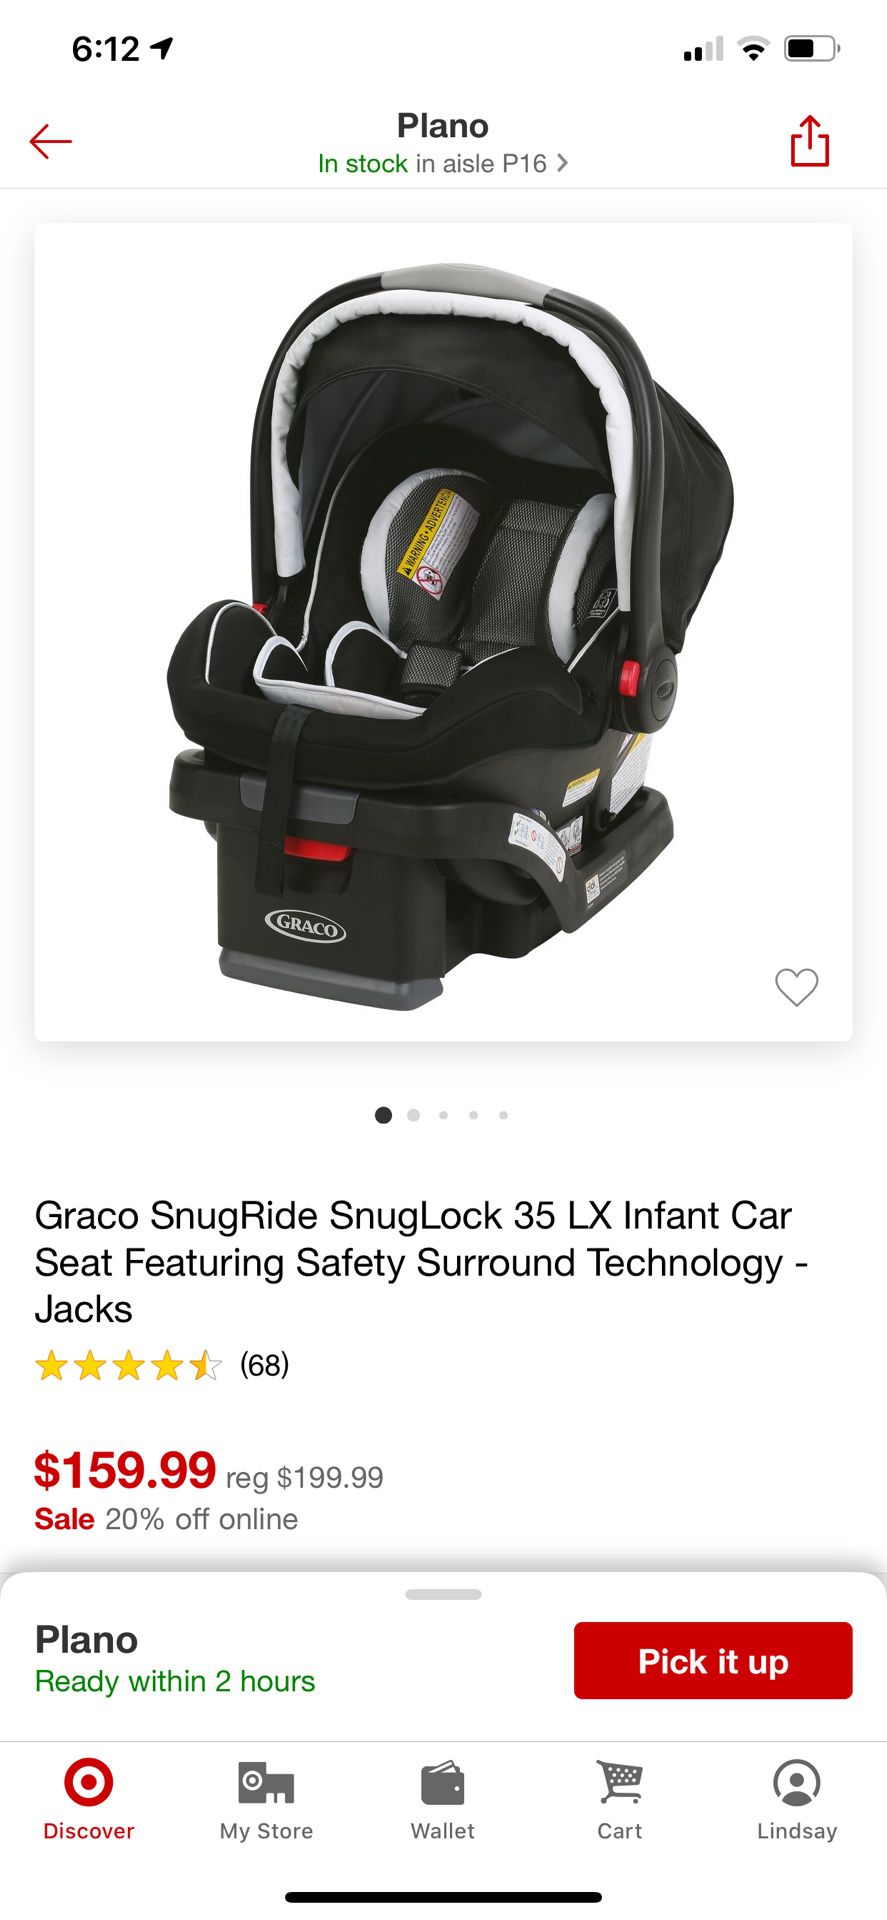 Gracie snuglock 35LX infant car seat